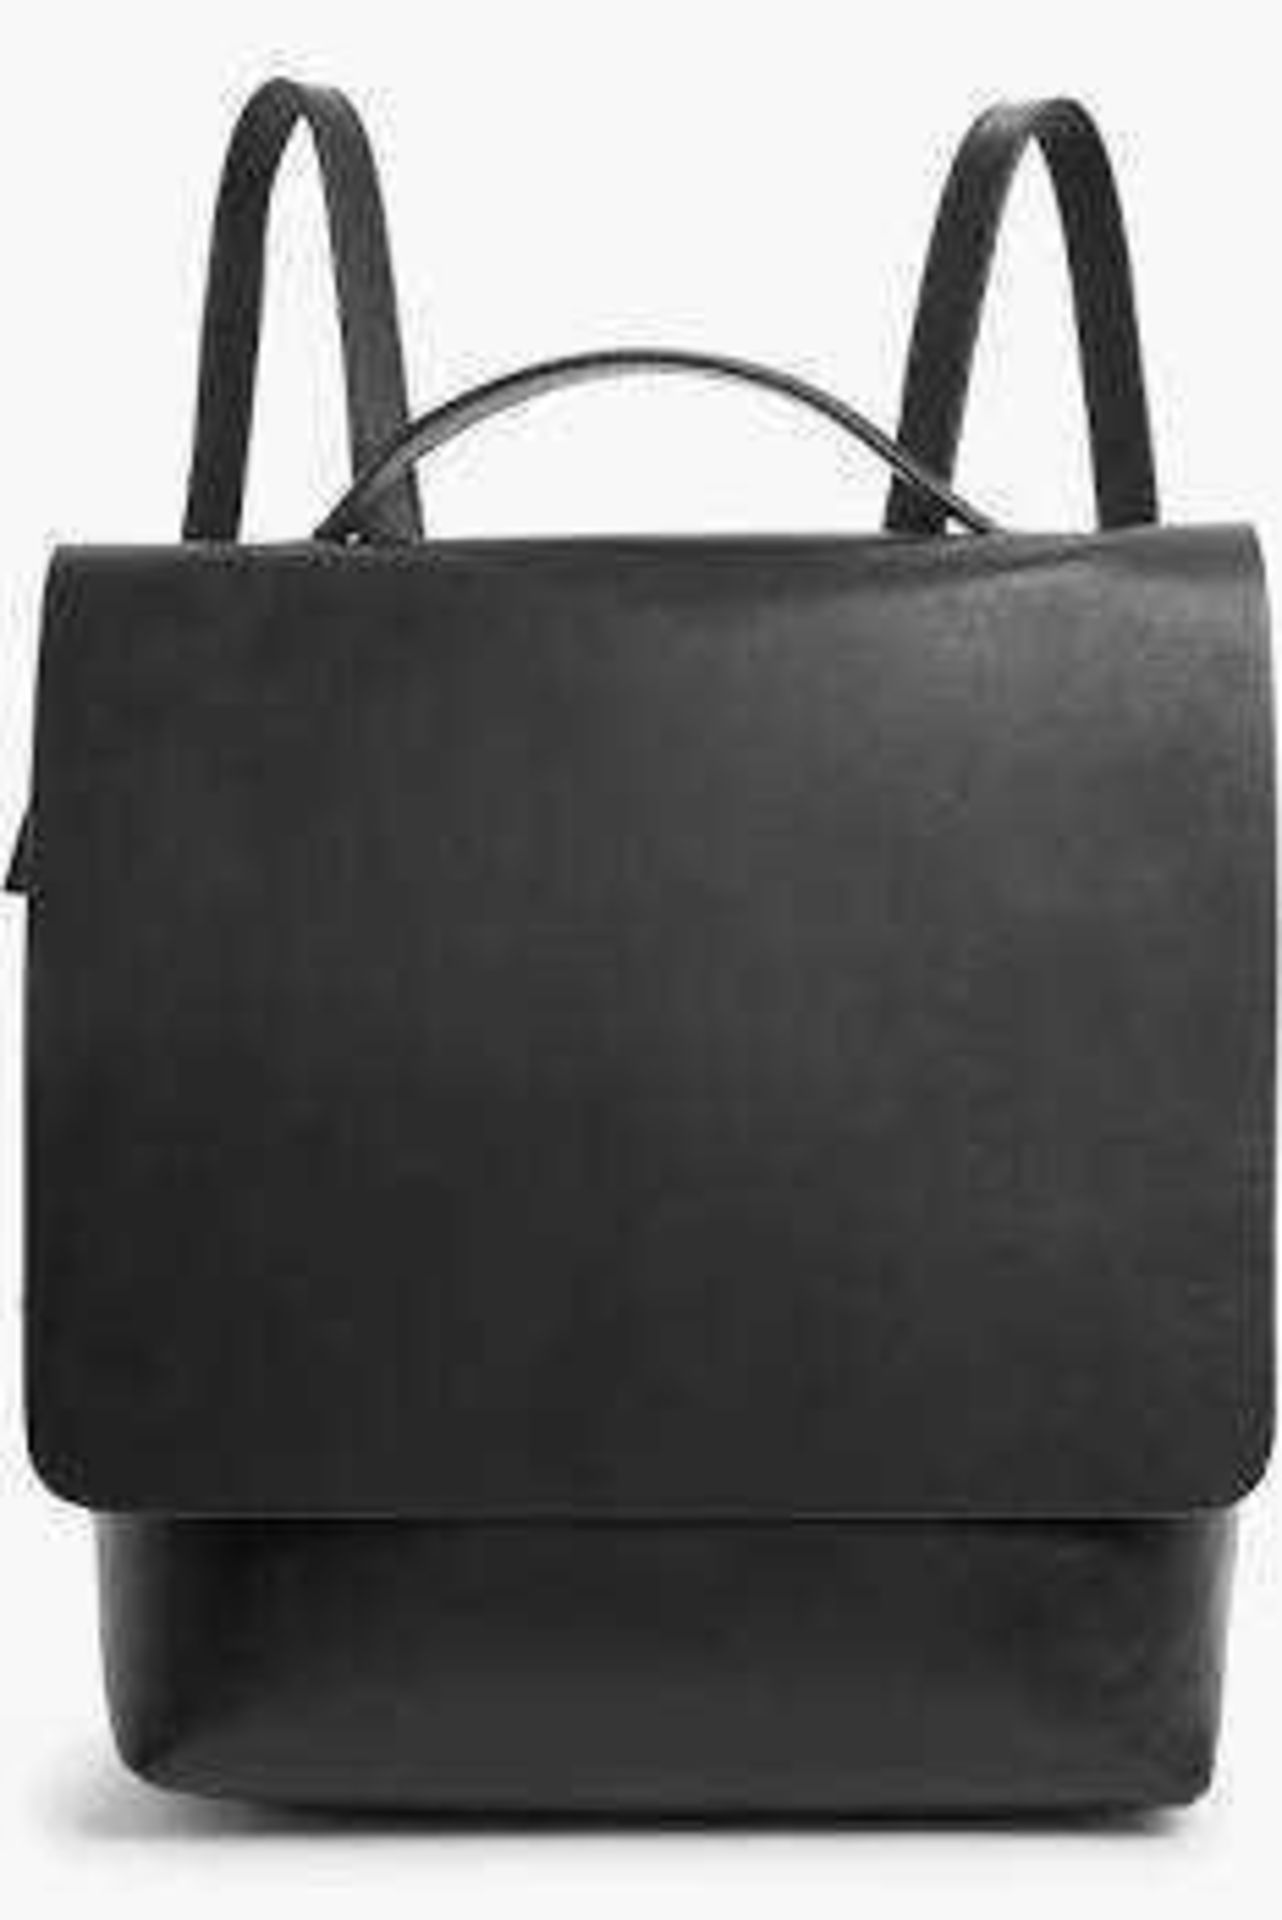 Combined RRP £120 Lot To Contain 2 John Lewis Designer Black Shoulder Bags